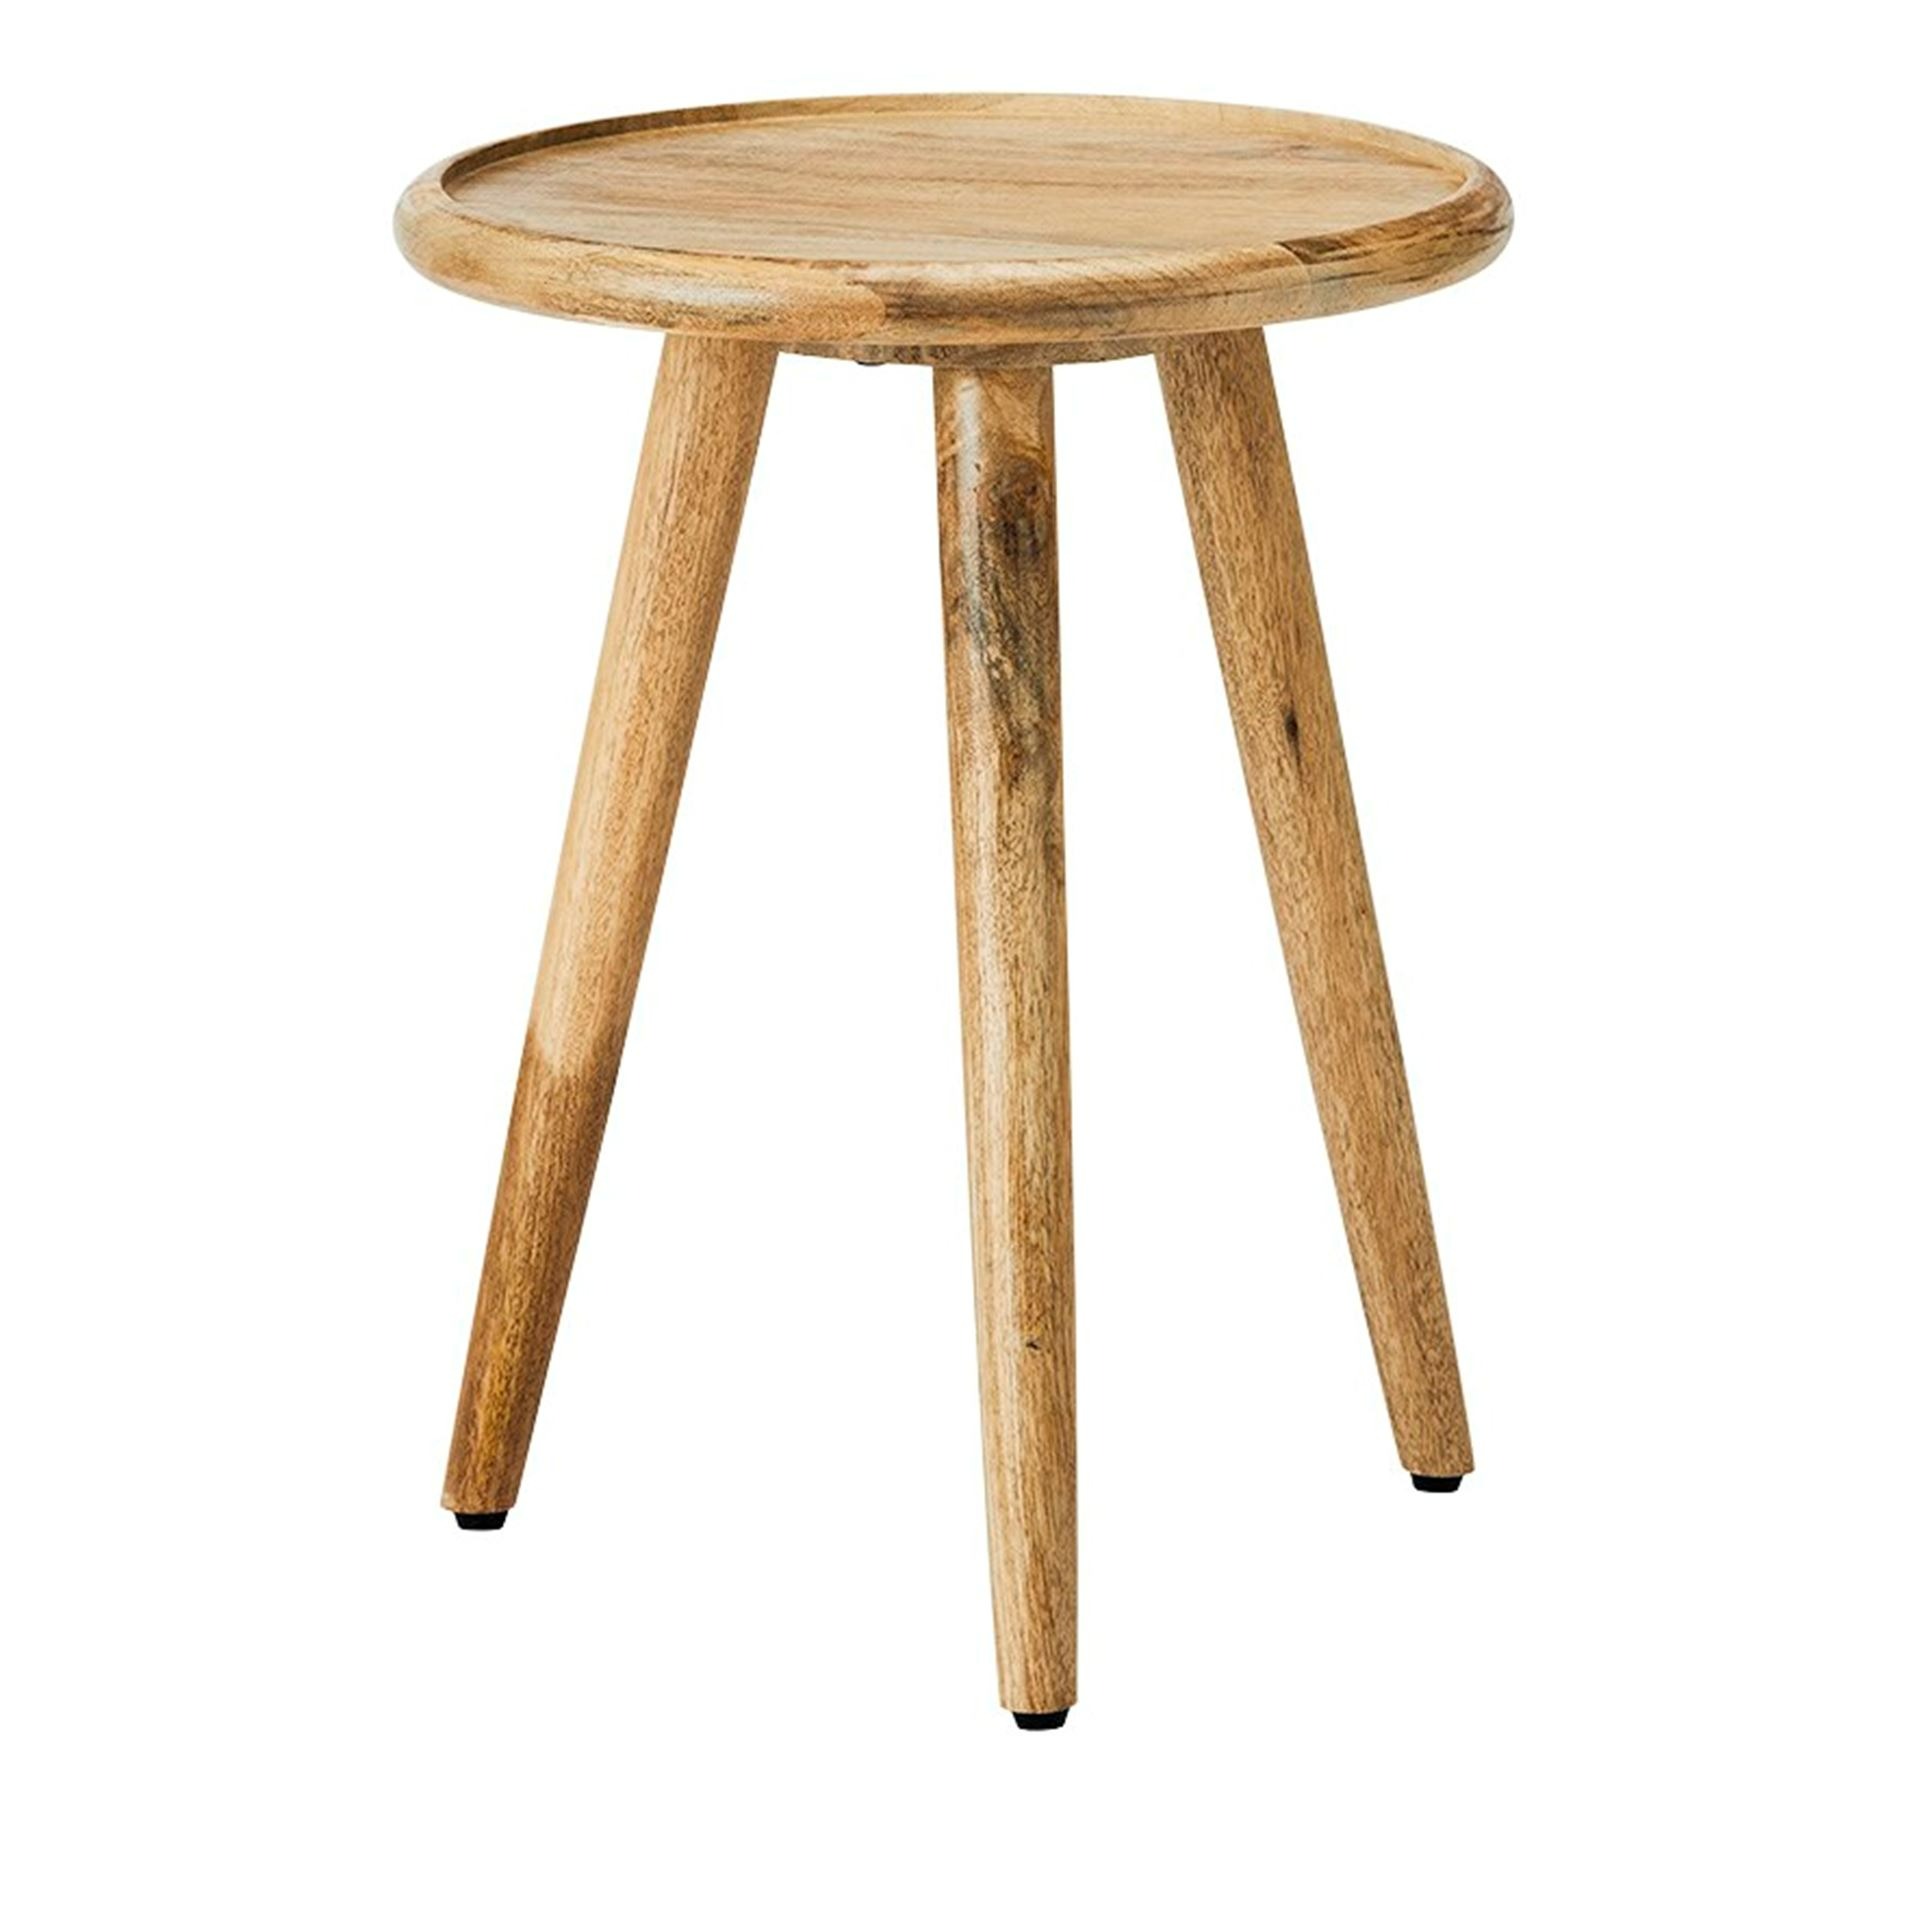 Adairs stool